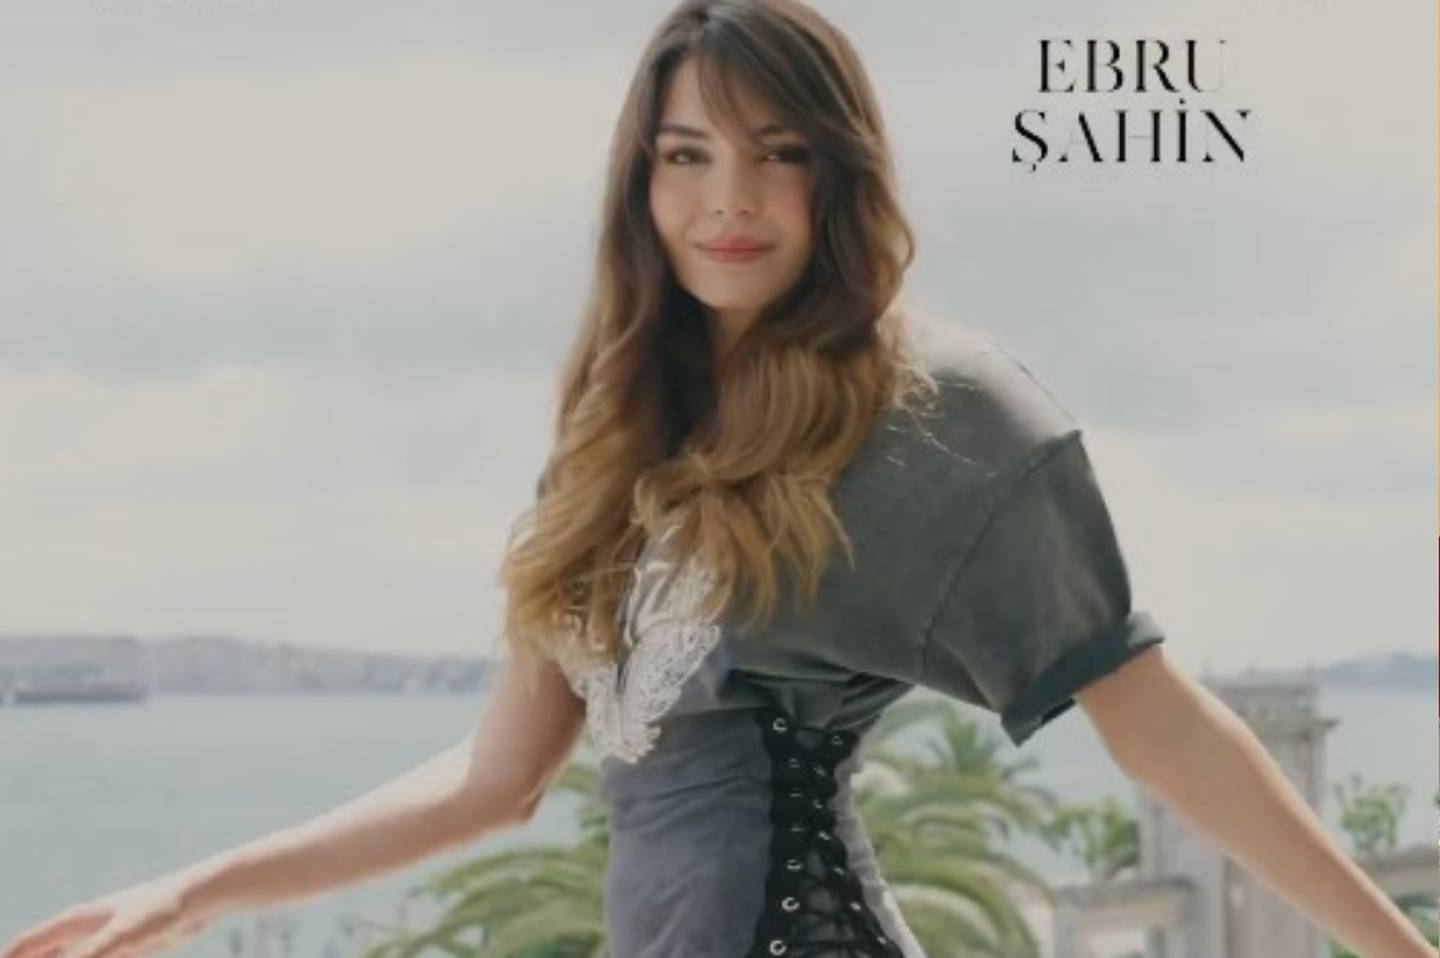 La portada de Ebru Sahin en la revista Harper's Bazaar